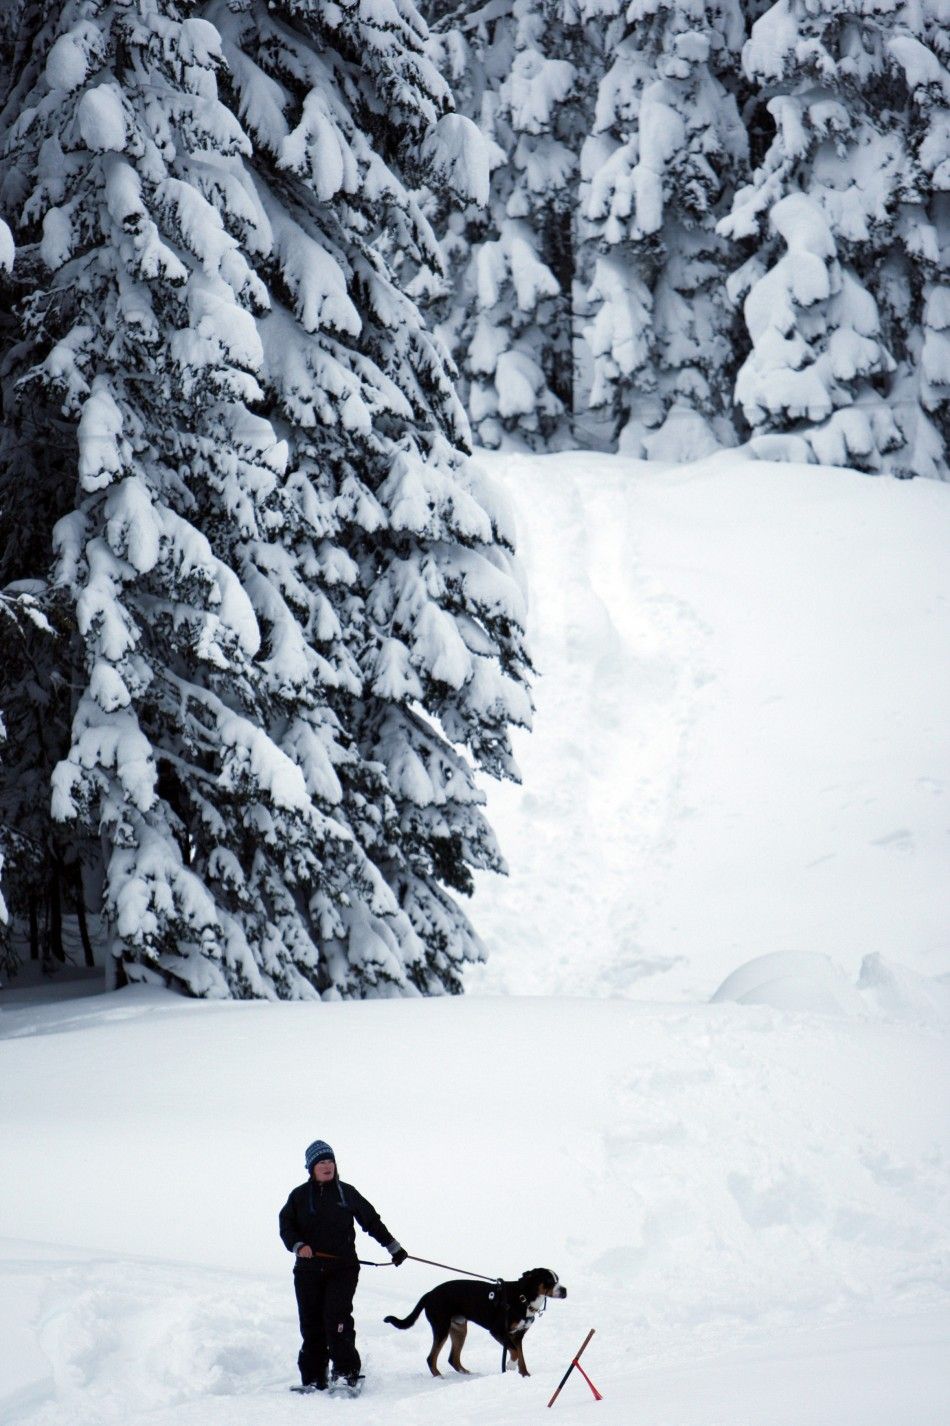 Winter 2012 Snap Avalanche Kills Three Skiers in Washington